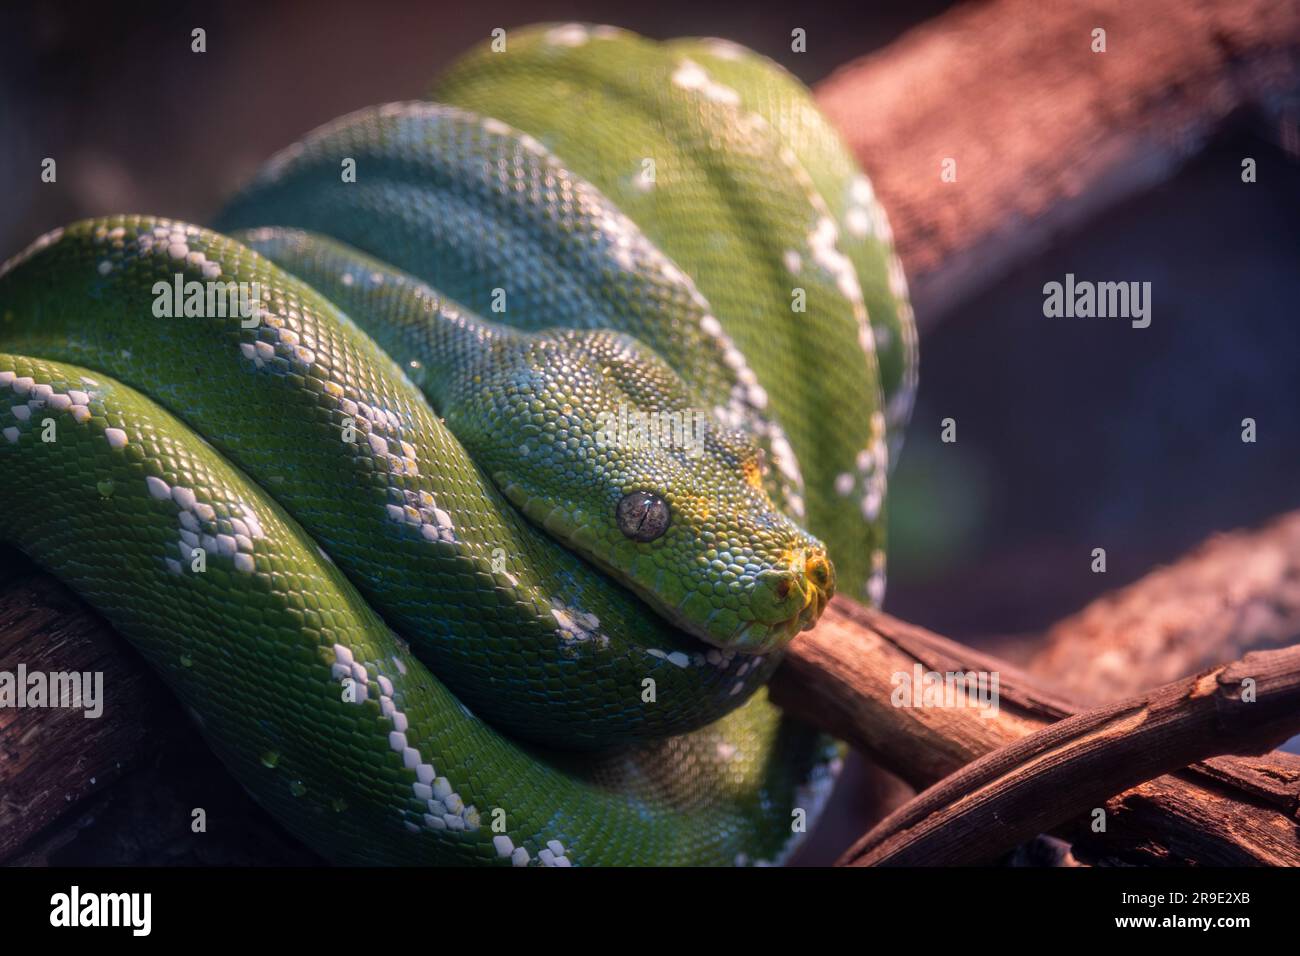 Pitone verde (Morelia viridis) avvolto intorno al ramo e osservando i dintorni Foto Stock